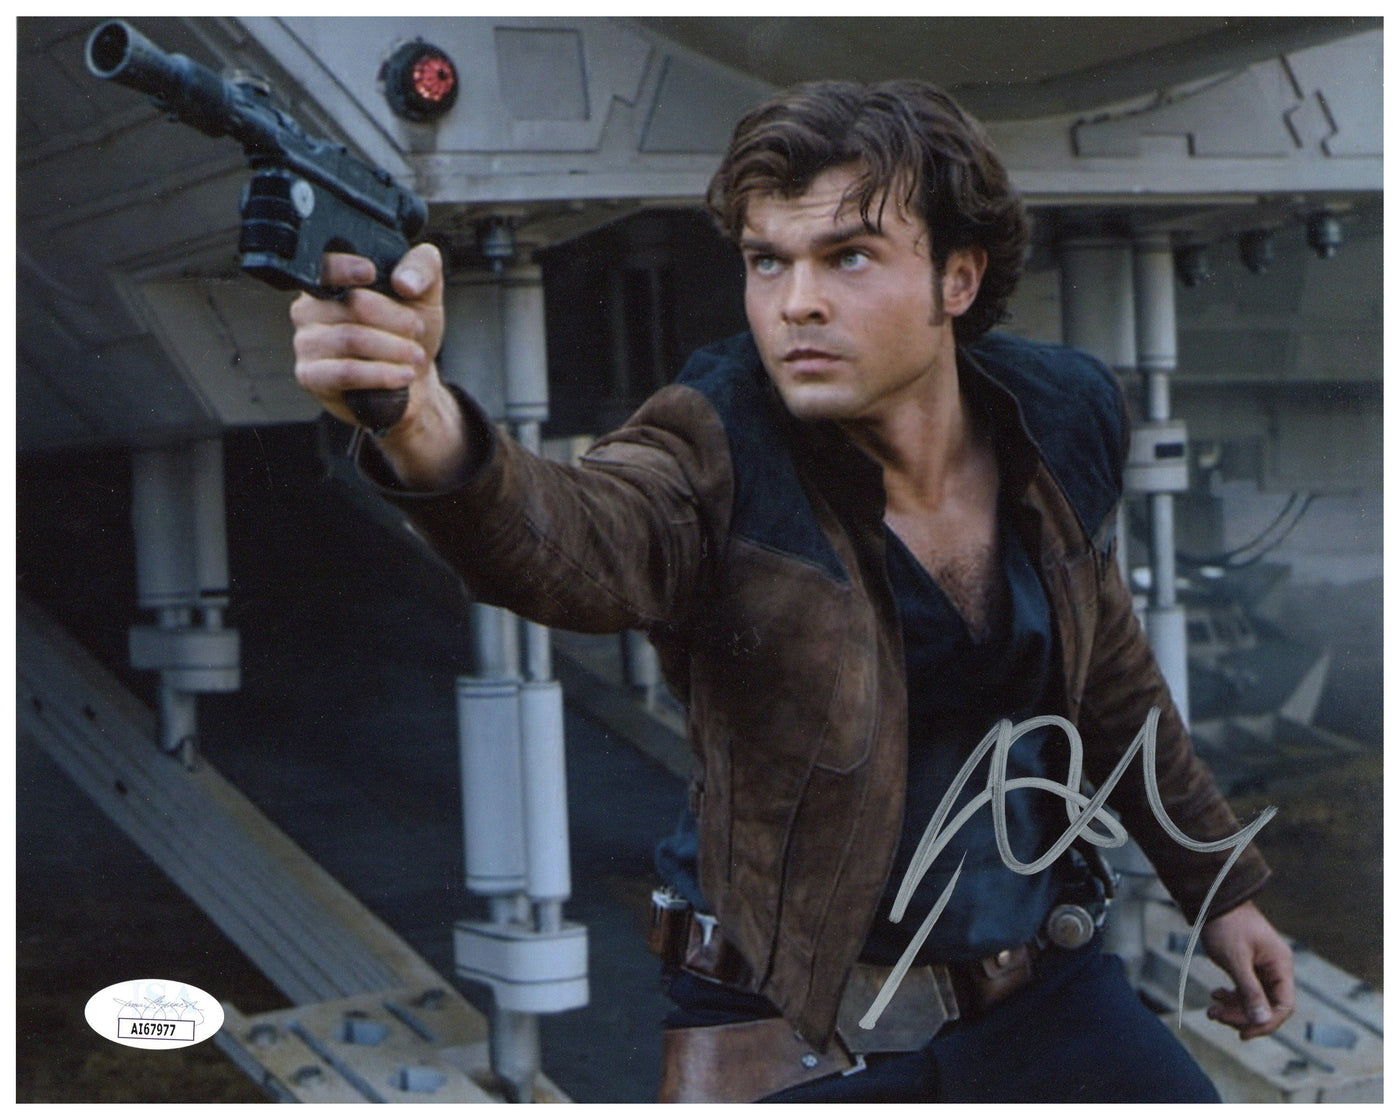 Alden Ehrenreich Signed 8x10 Photo Han Solo Star Wars Autographed JSA COA